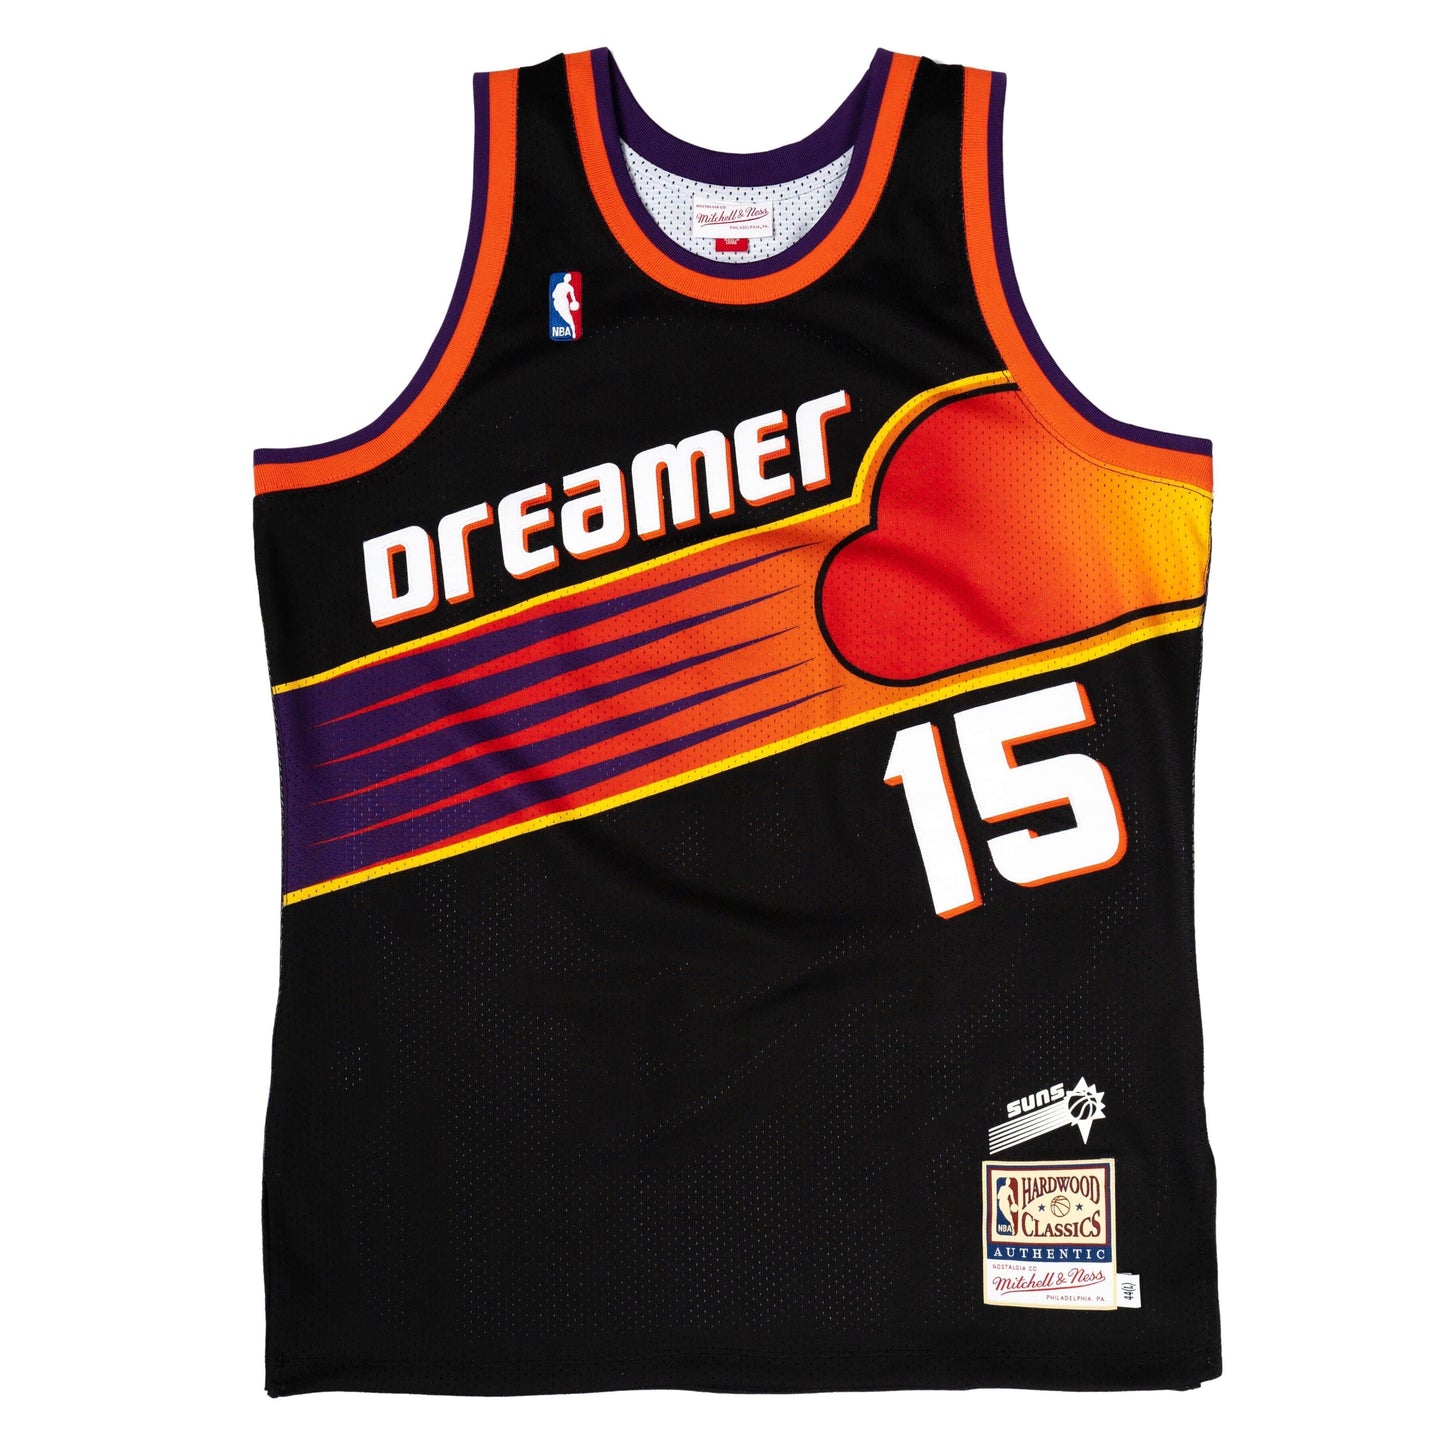 DREAMER x Mitchell & Ness Phoenix Suns Jersey